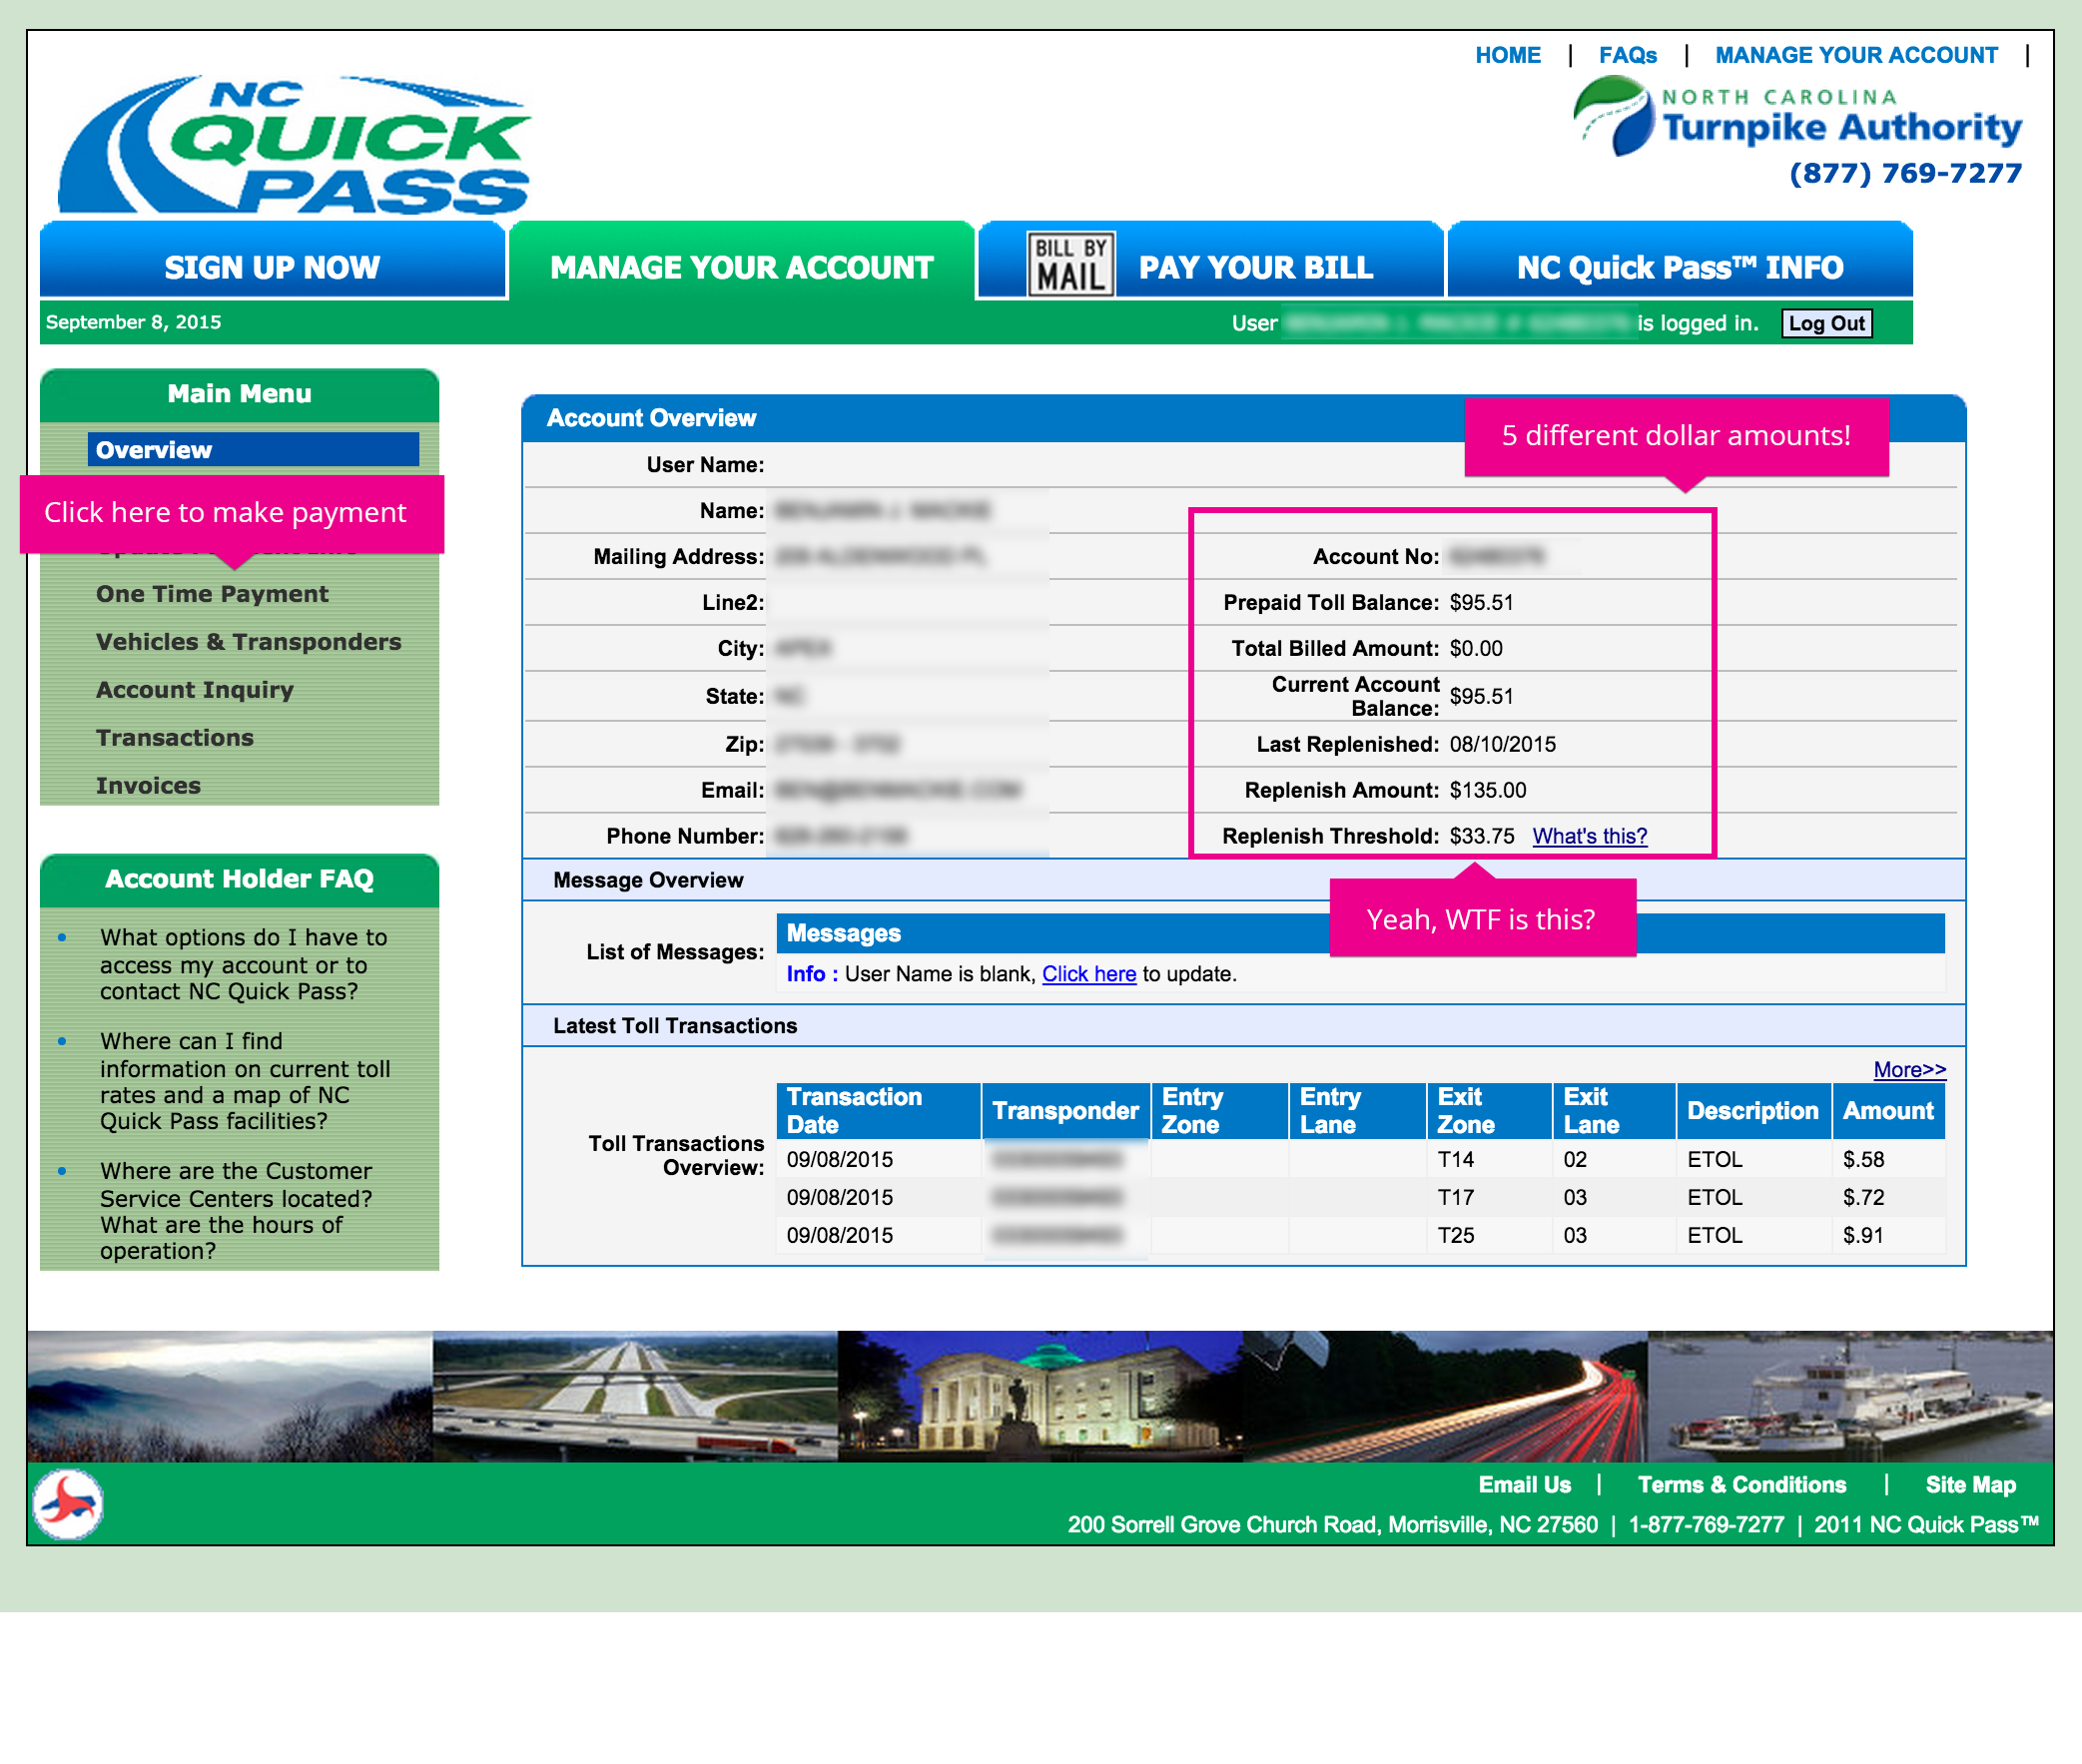 North Carolina Quick Pass website screengrab